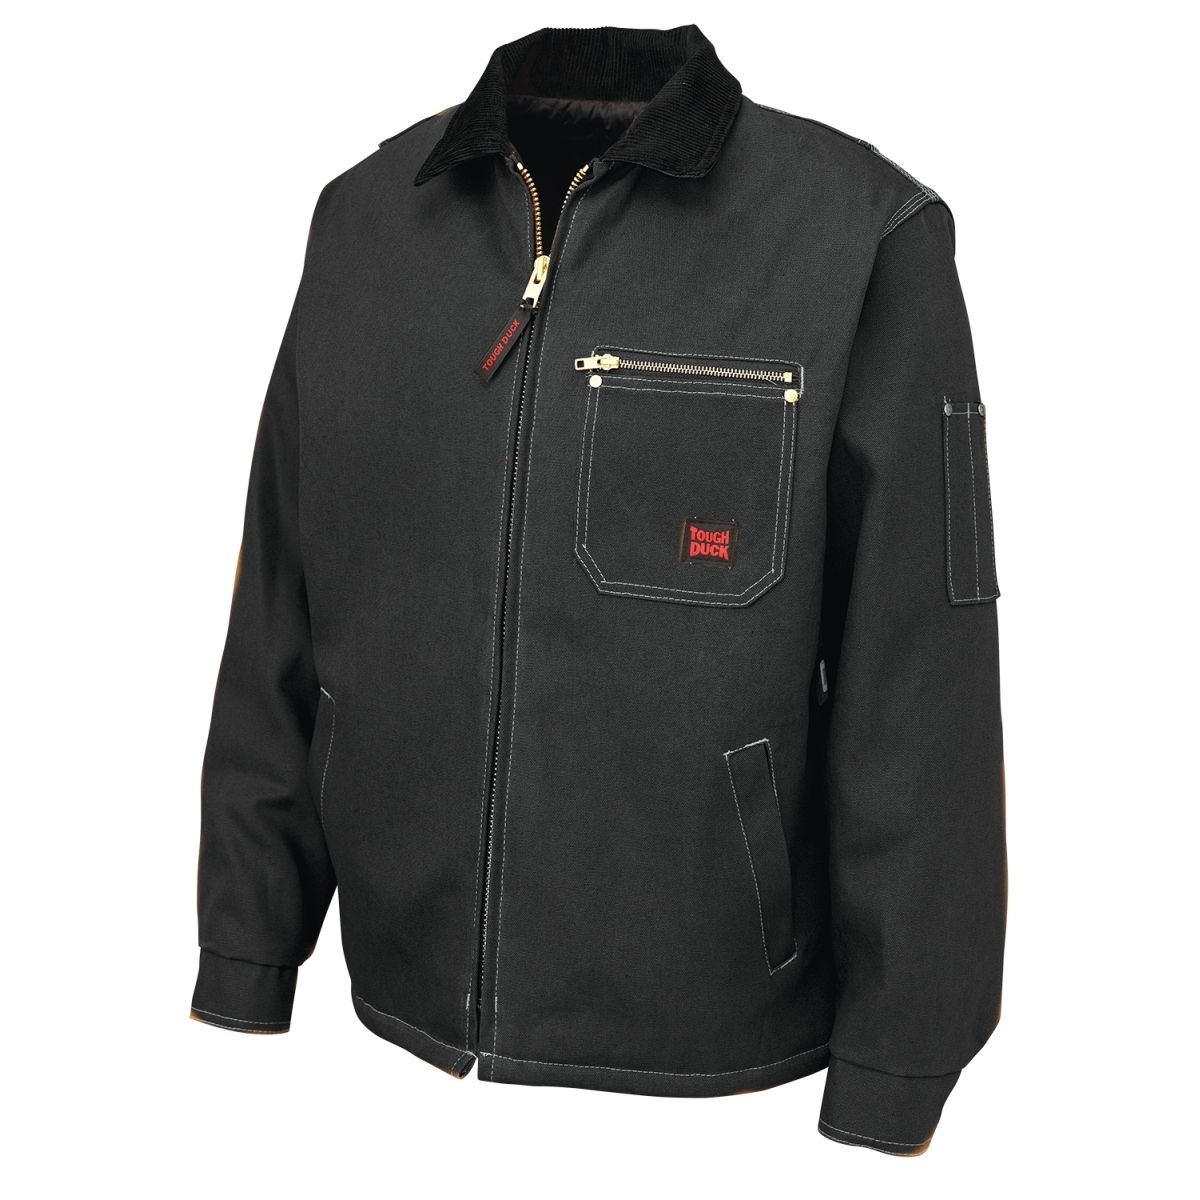 Tough Duck Men's Chore Jacket Black - WJ31-BLK BLACK - BLACK, XL